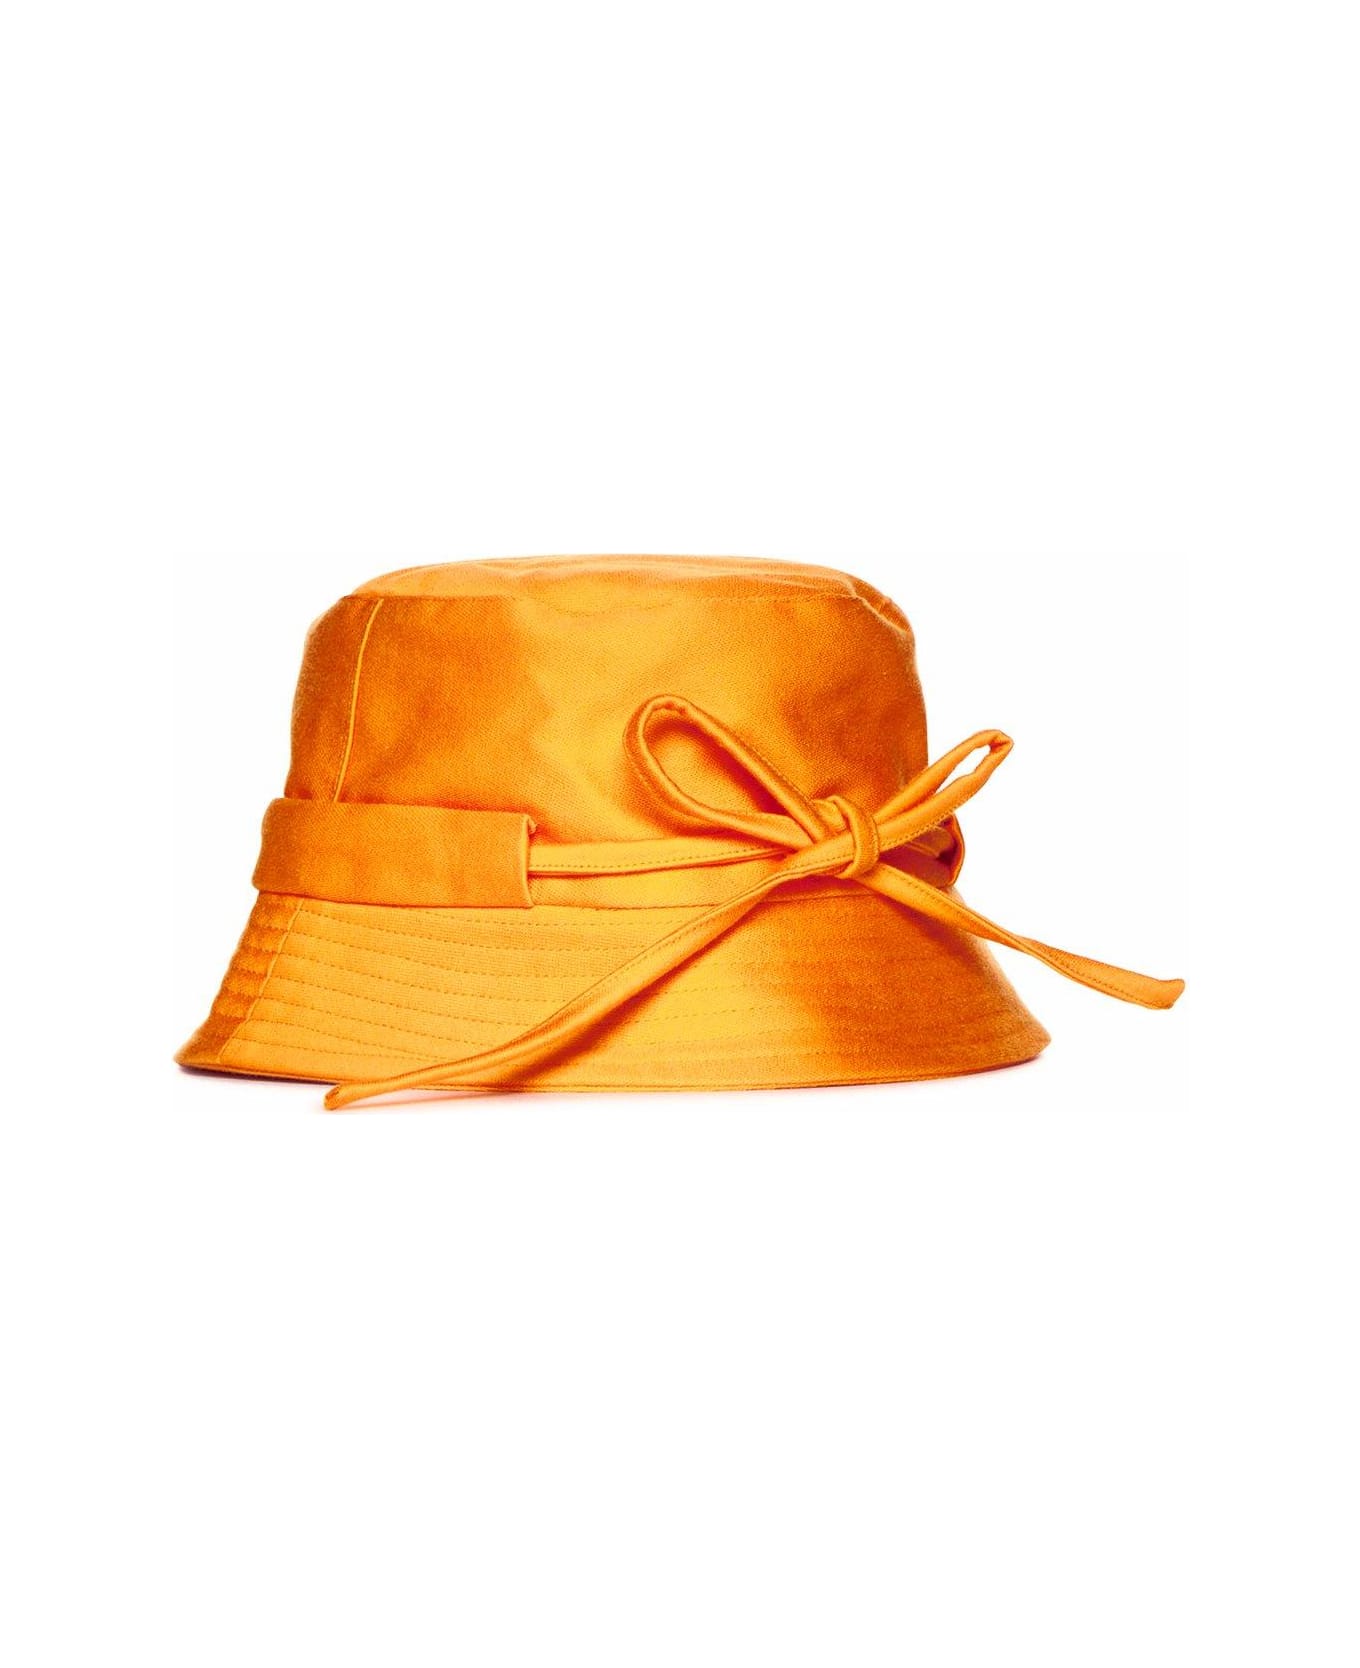 Jacquemus Le Bob Gadjo Knotted Bucket Hat - Dark orange